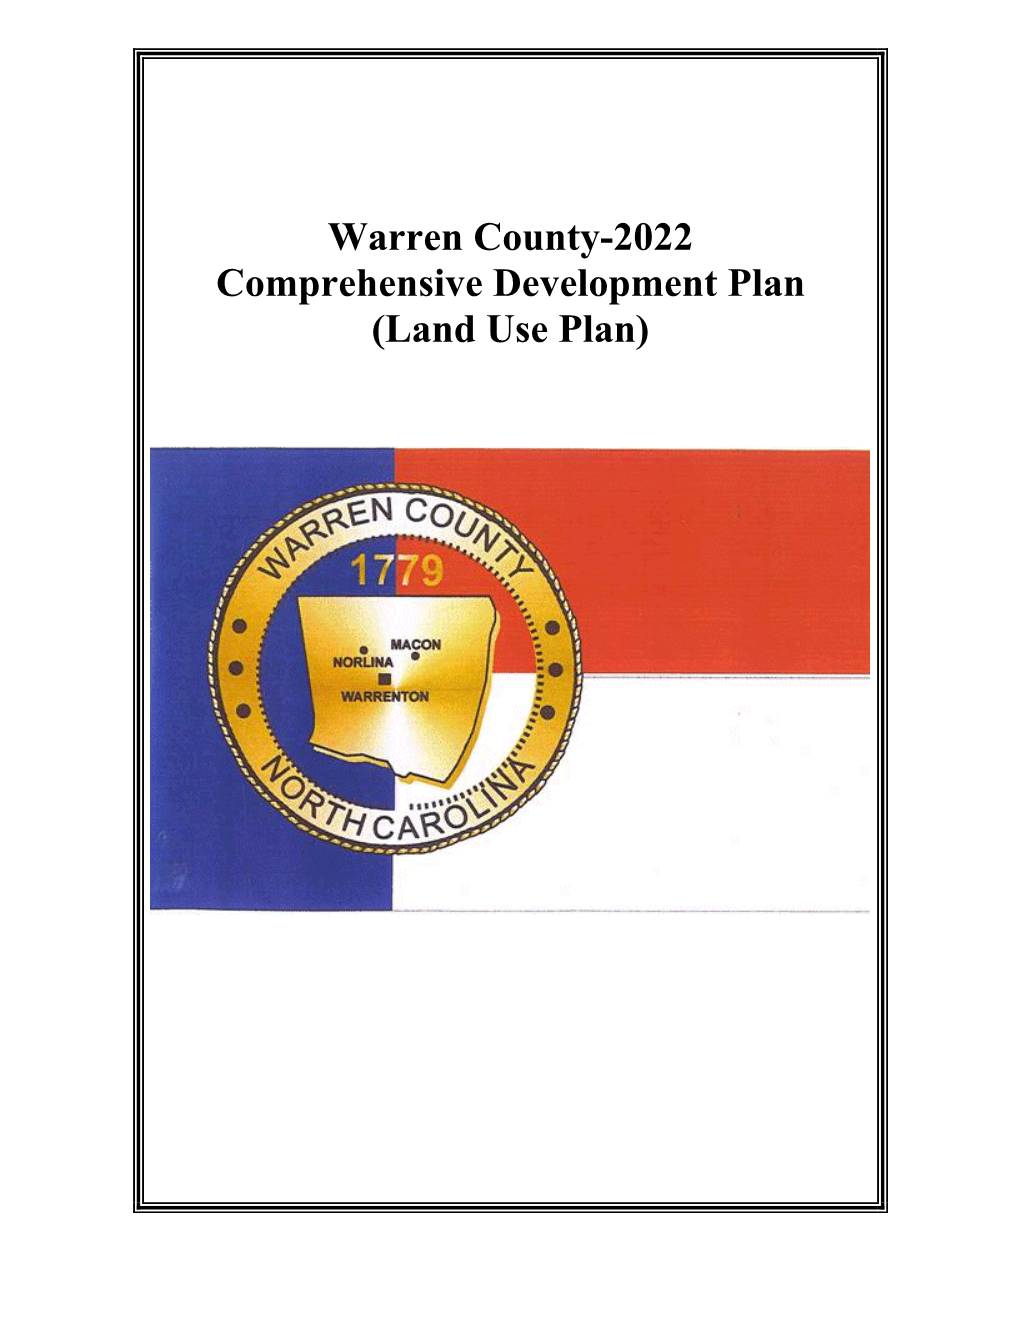 Warren County Land Use Plan